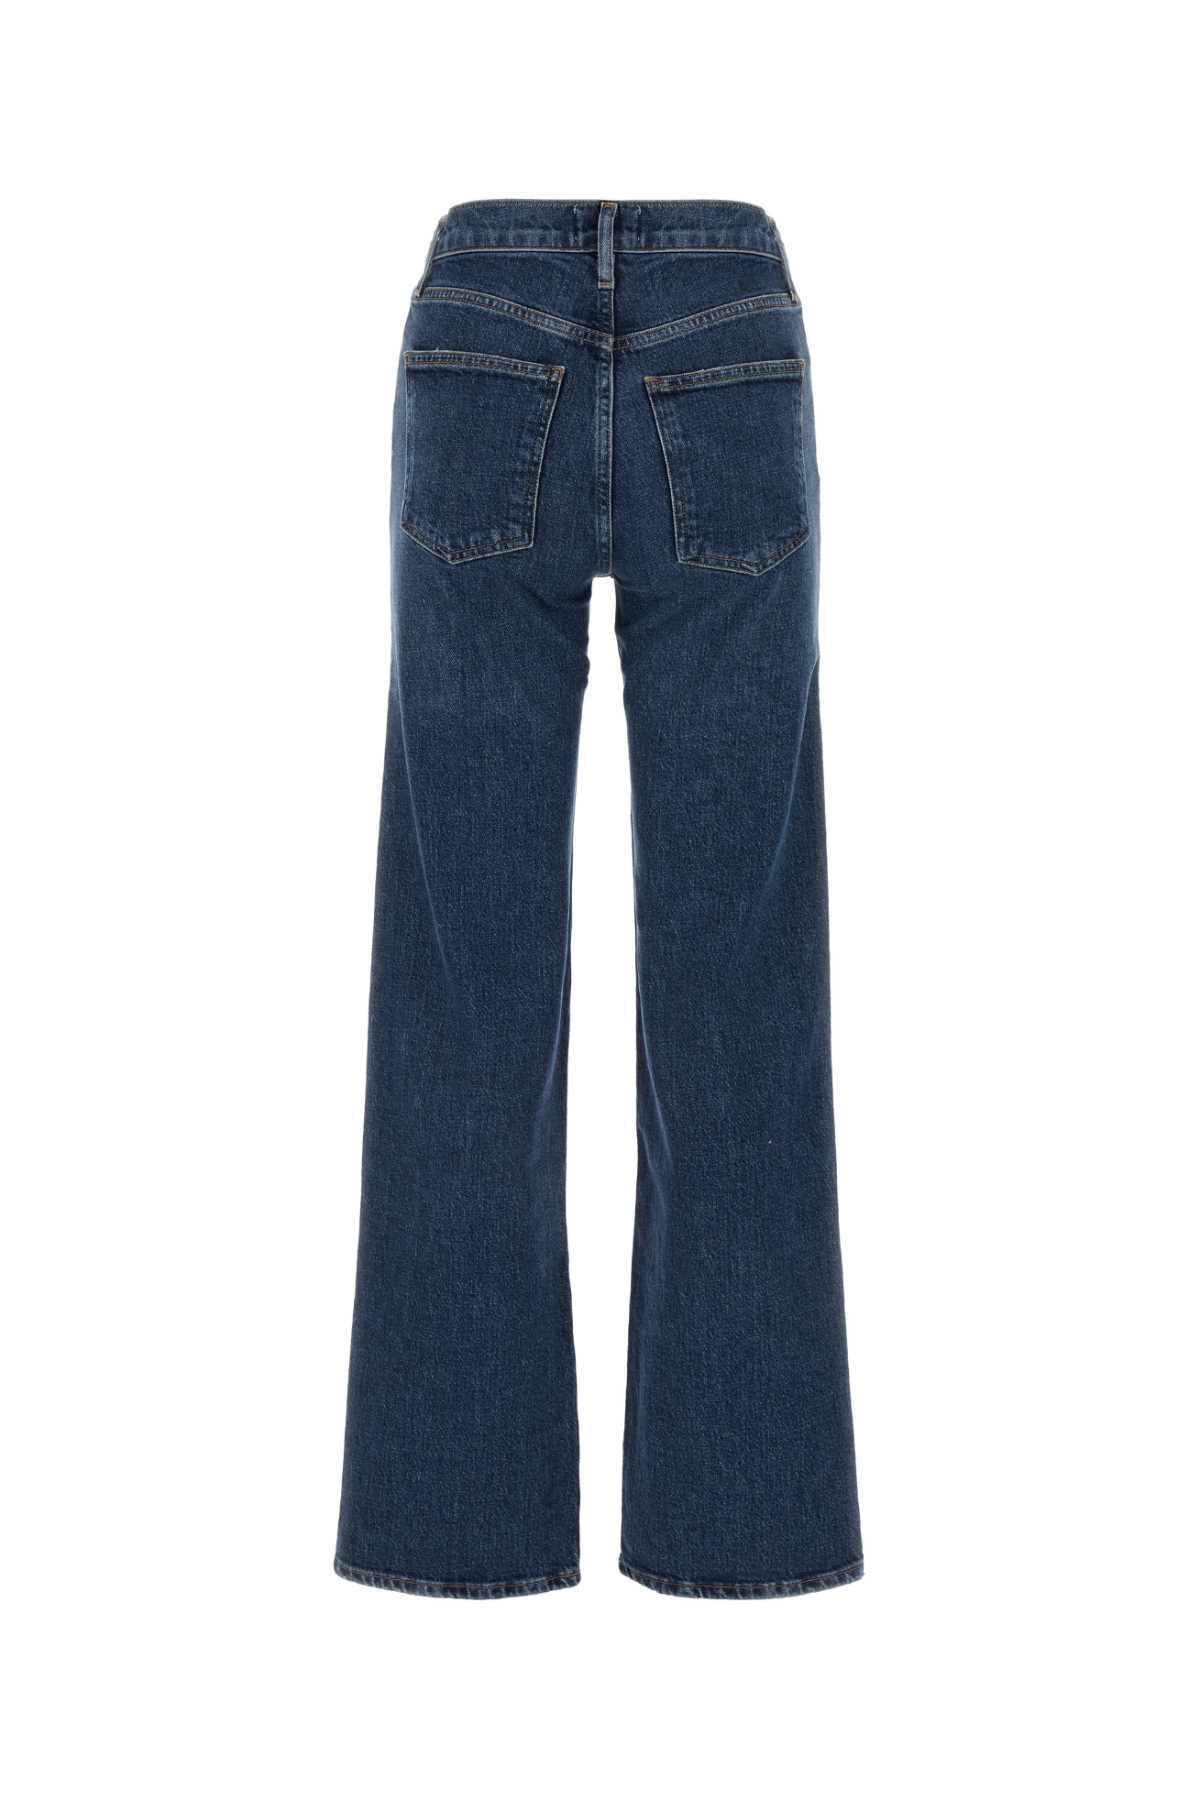 Shop Agolde Stretch Denim Tempo Jeans